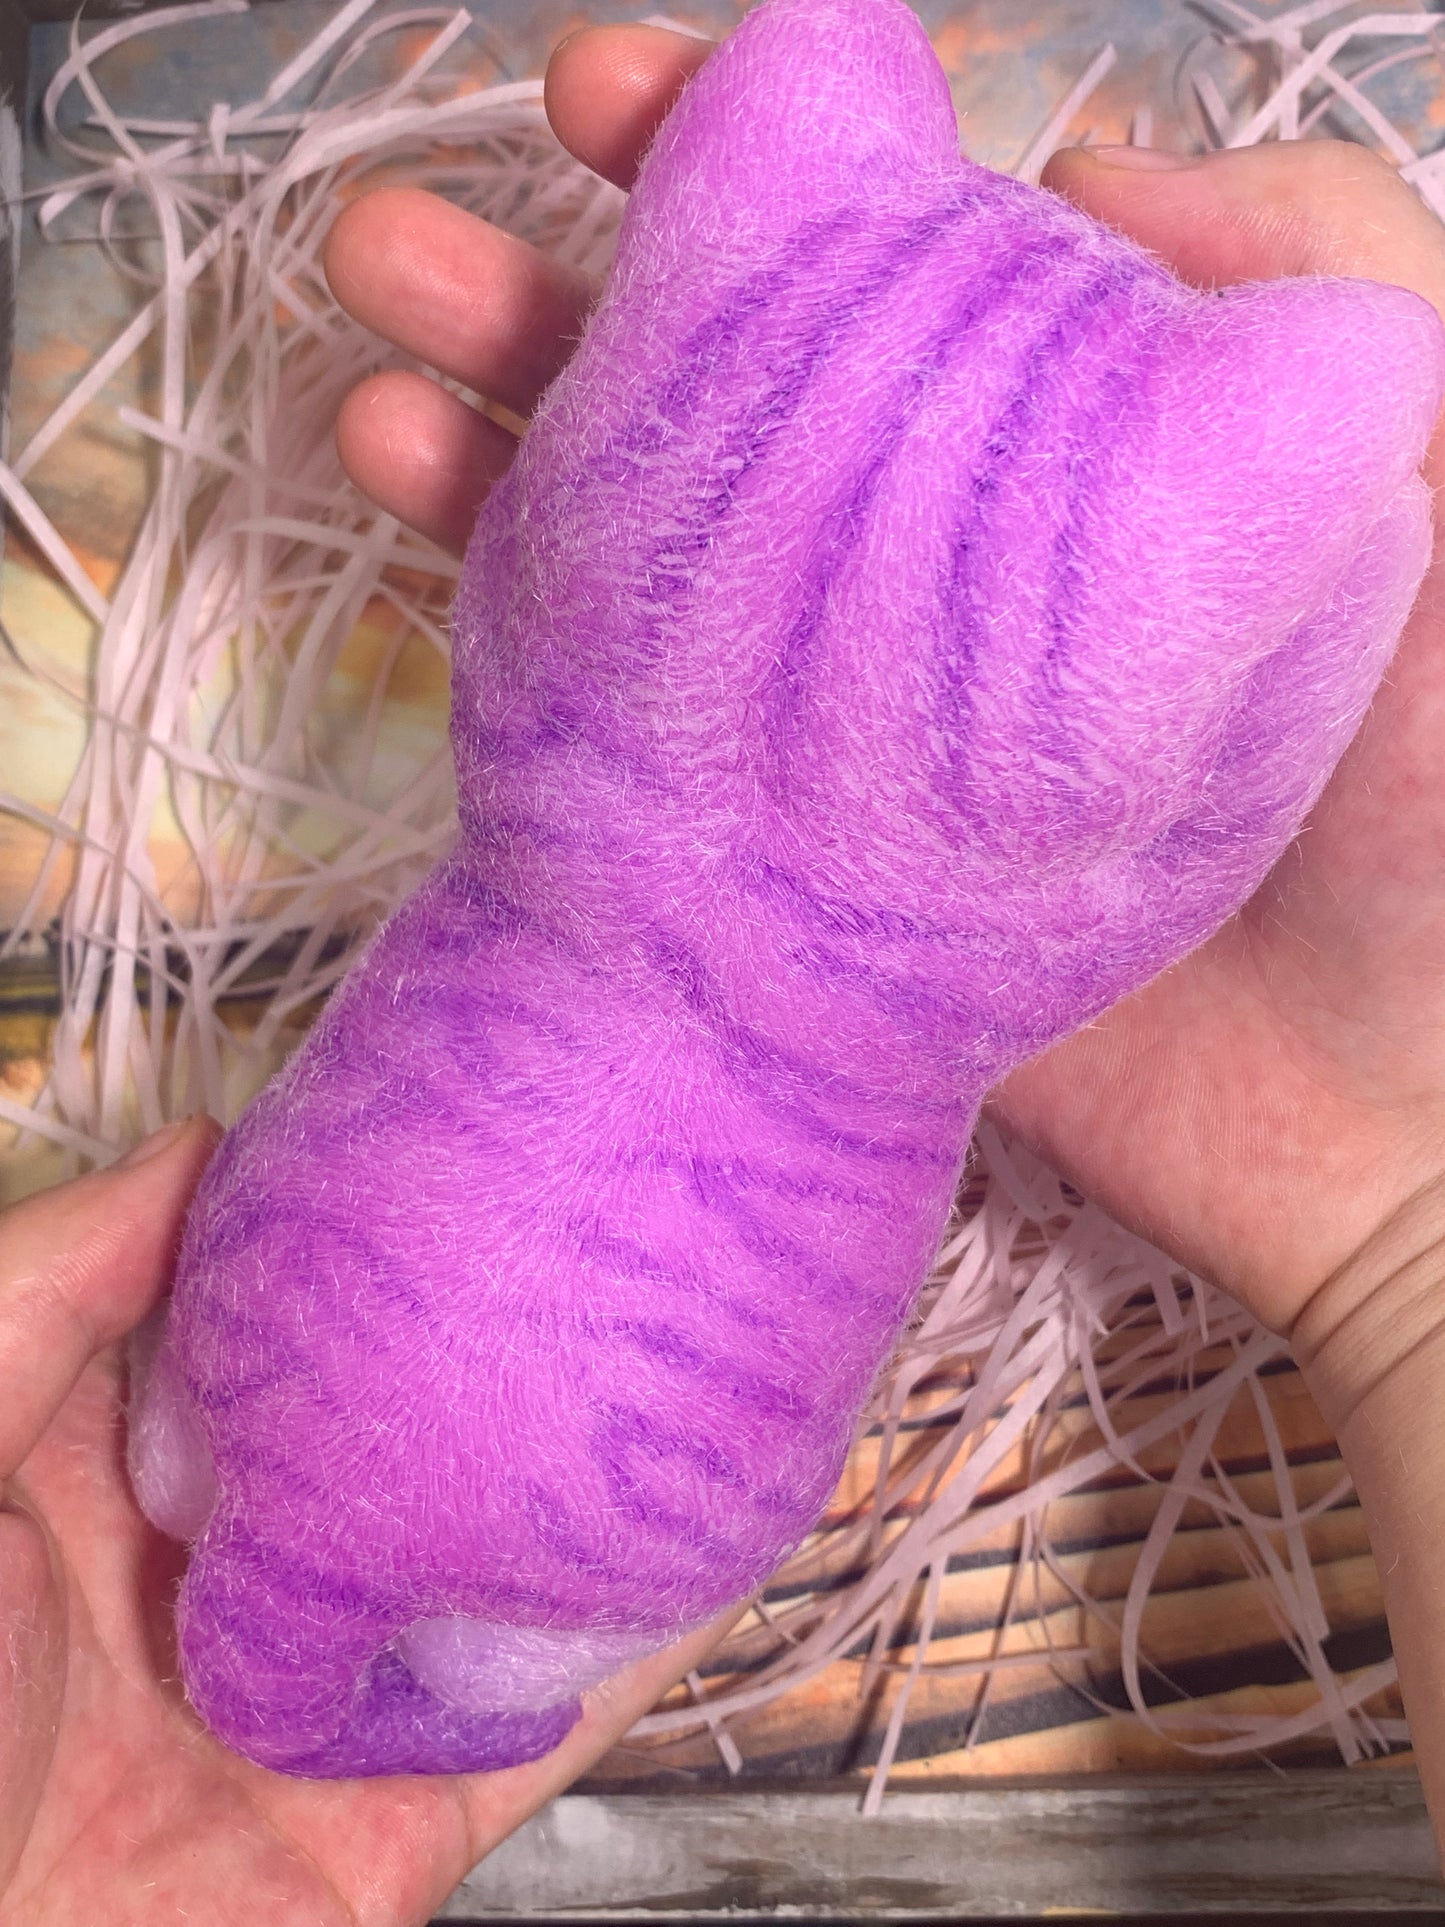 Live stream violet cat squishy